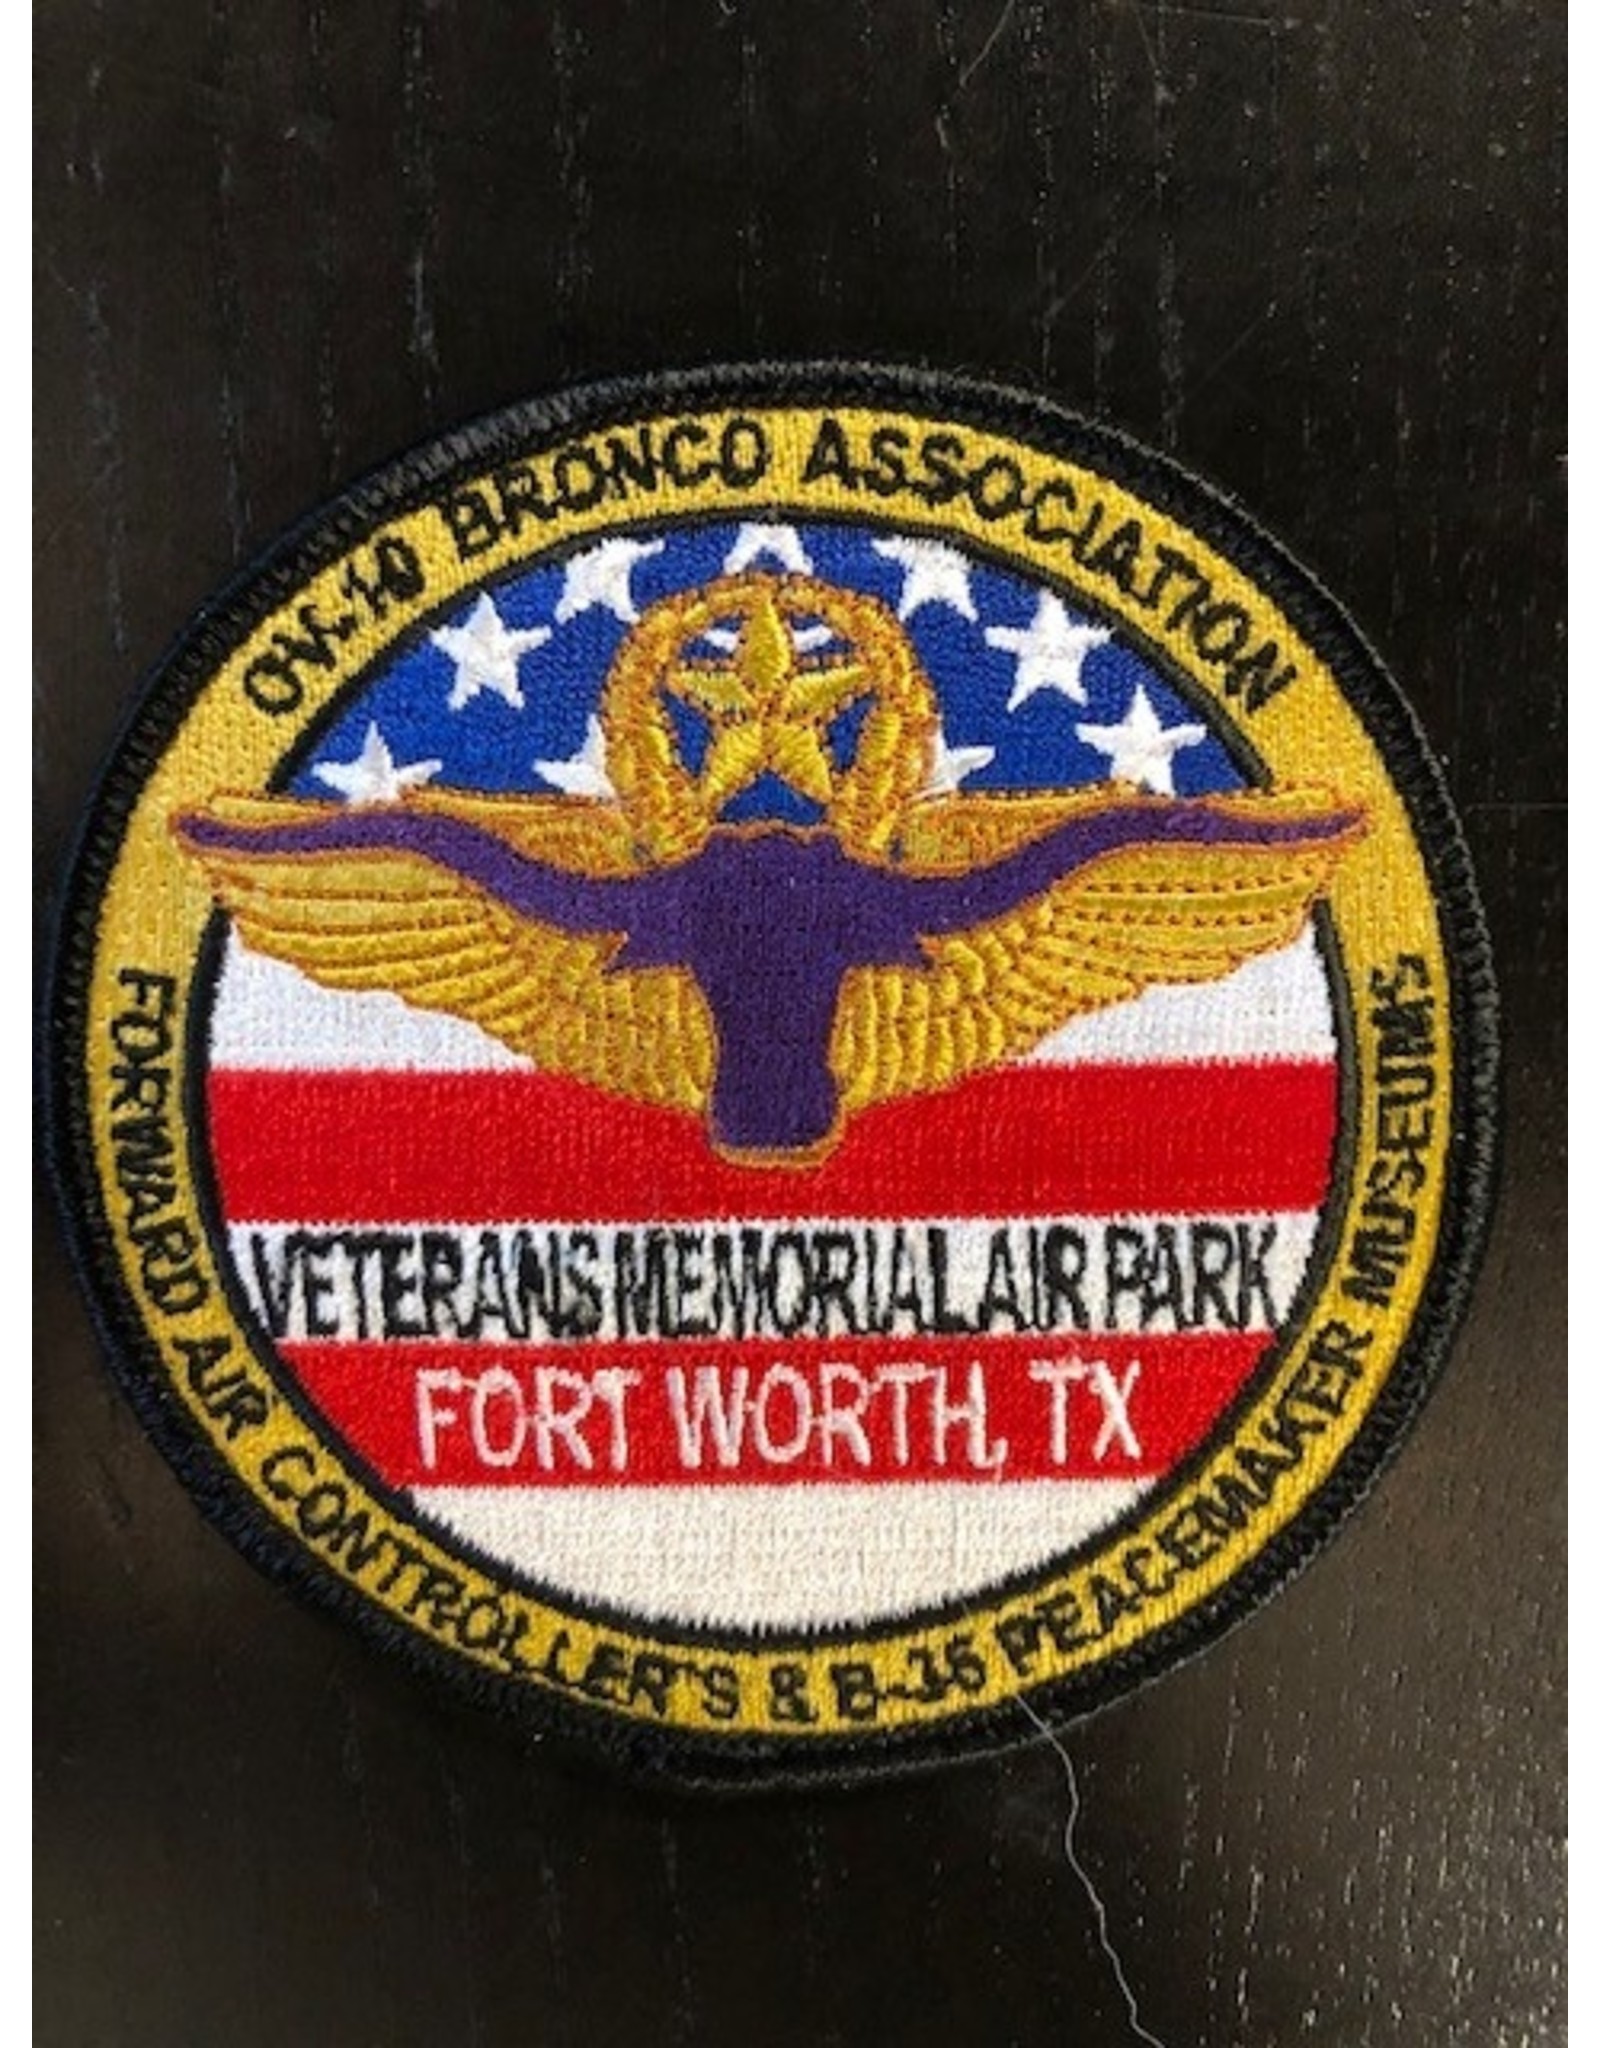 FWAM Veterans Memorial Air Park, patch